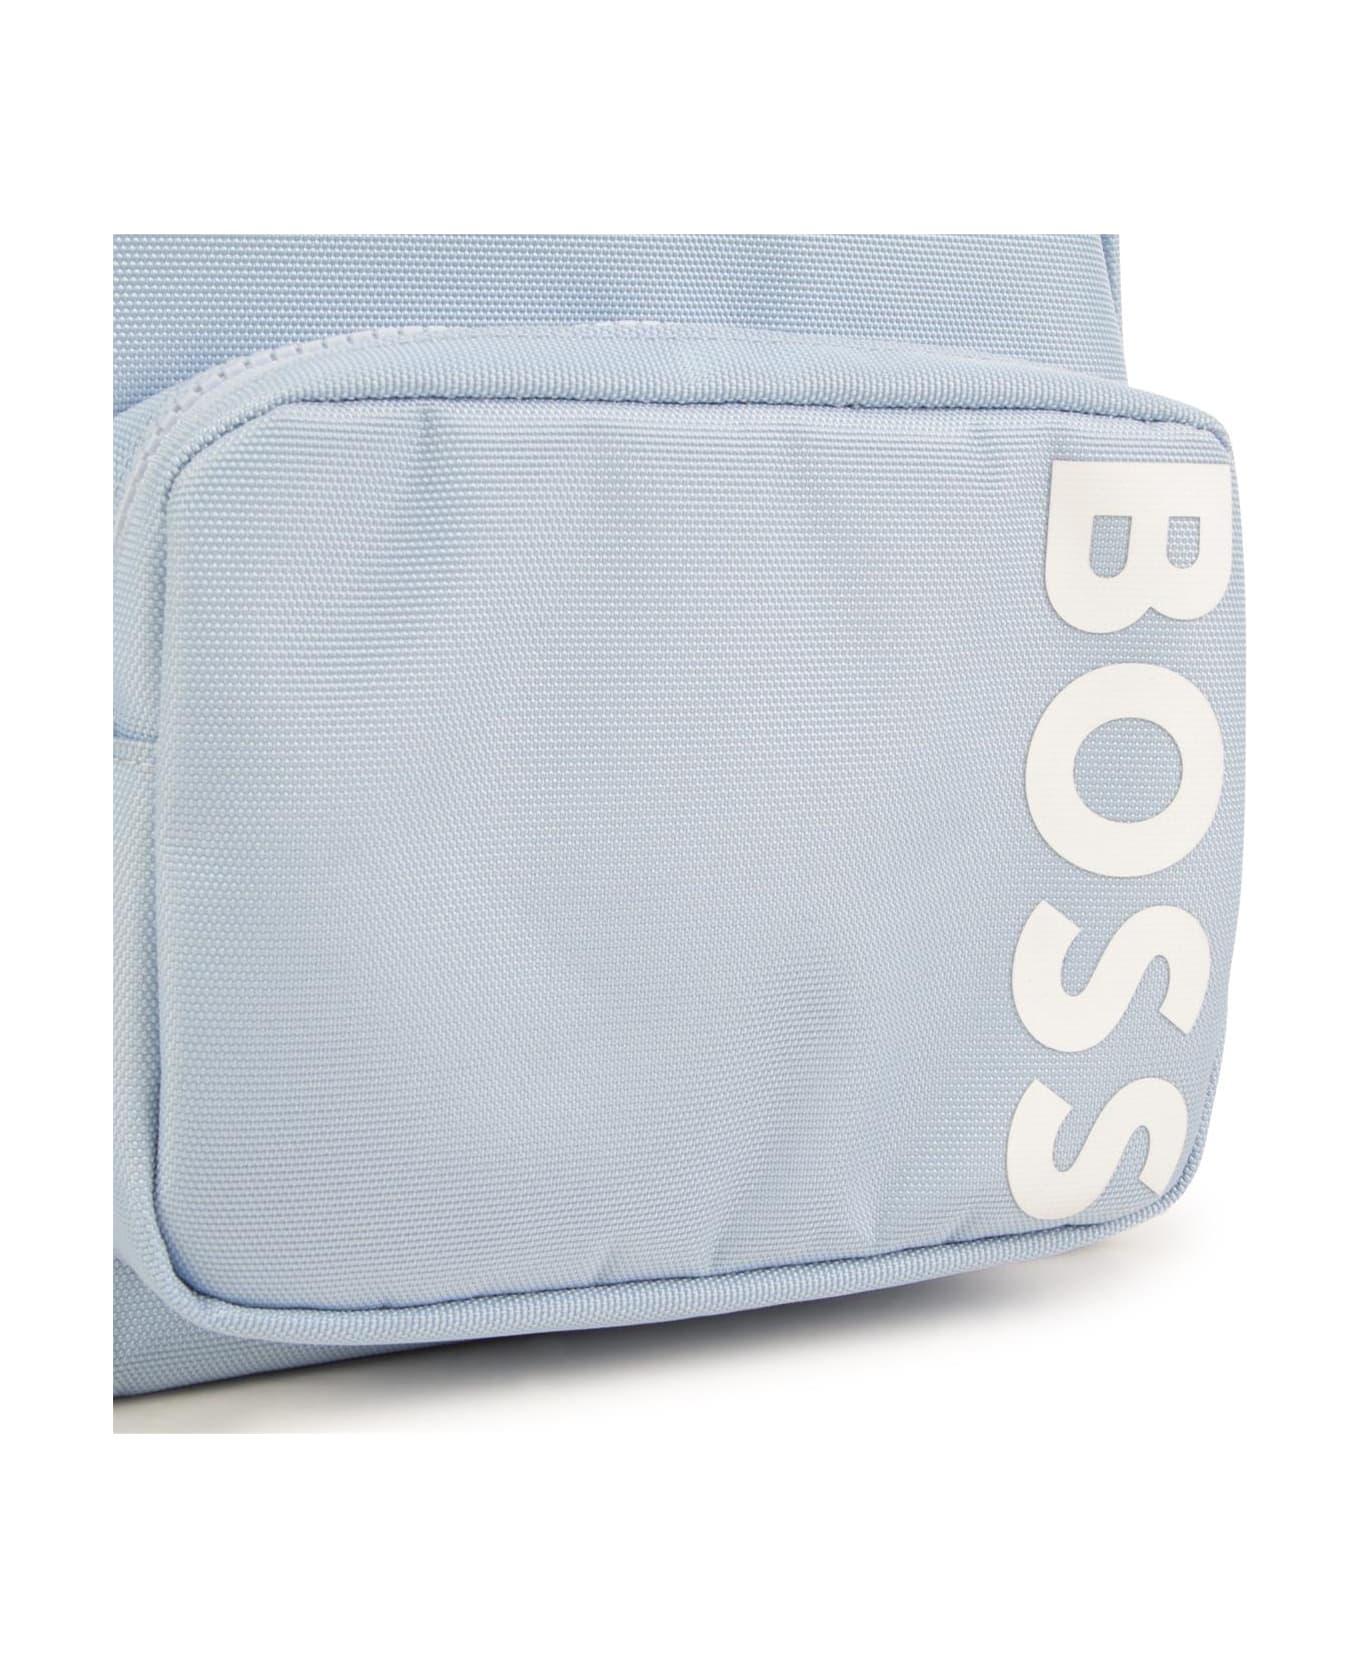 Hugo Boss Backpack With Print - Light blue